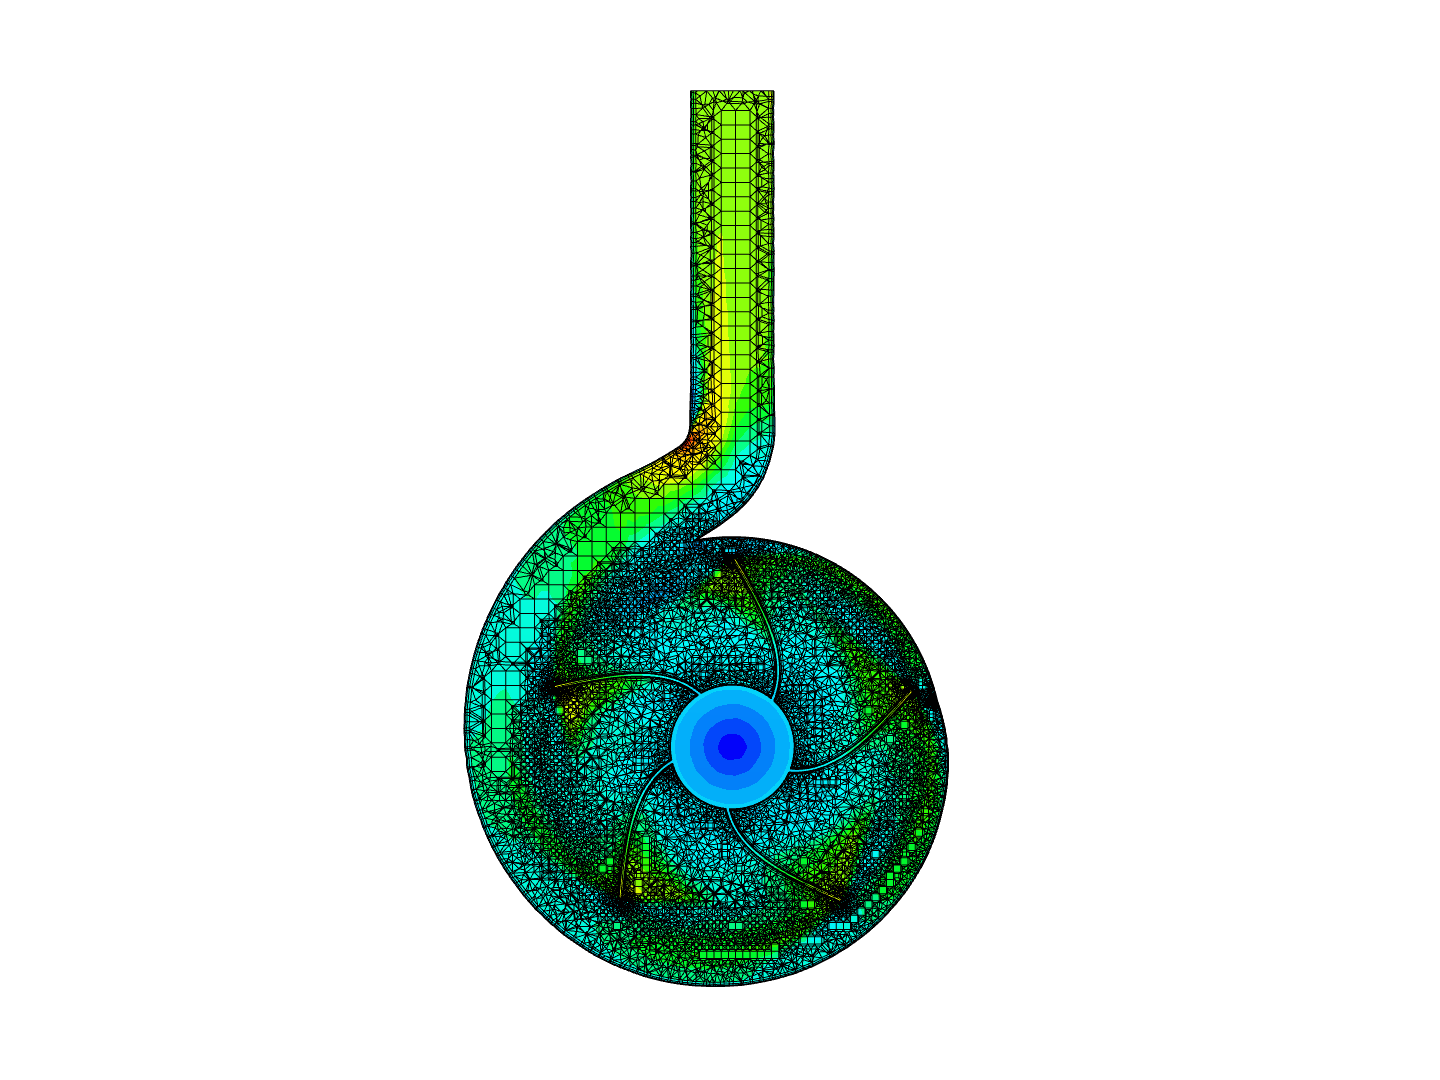 Coursera-Centrifugal pump simulation image